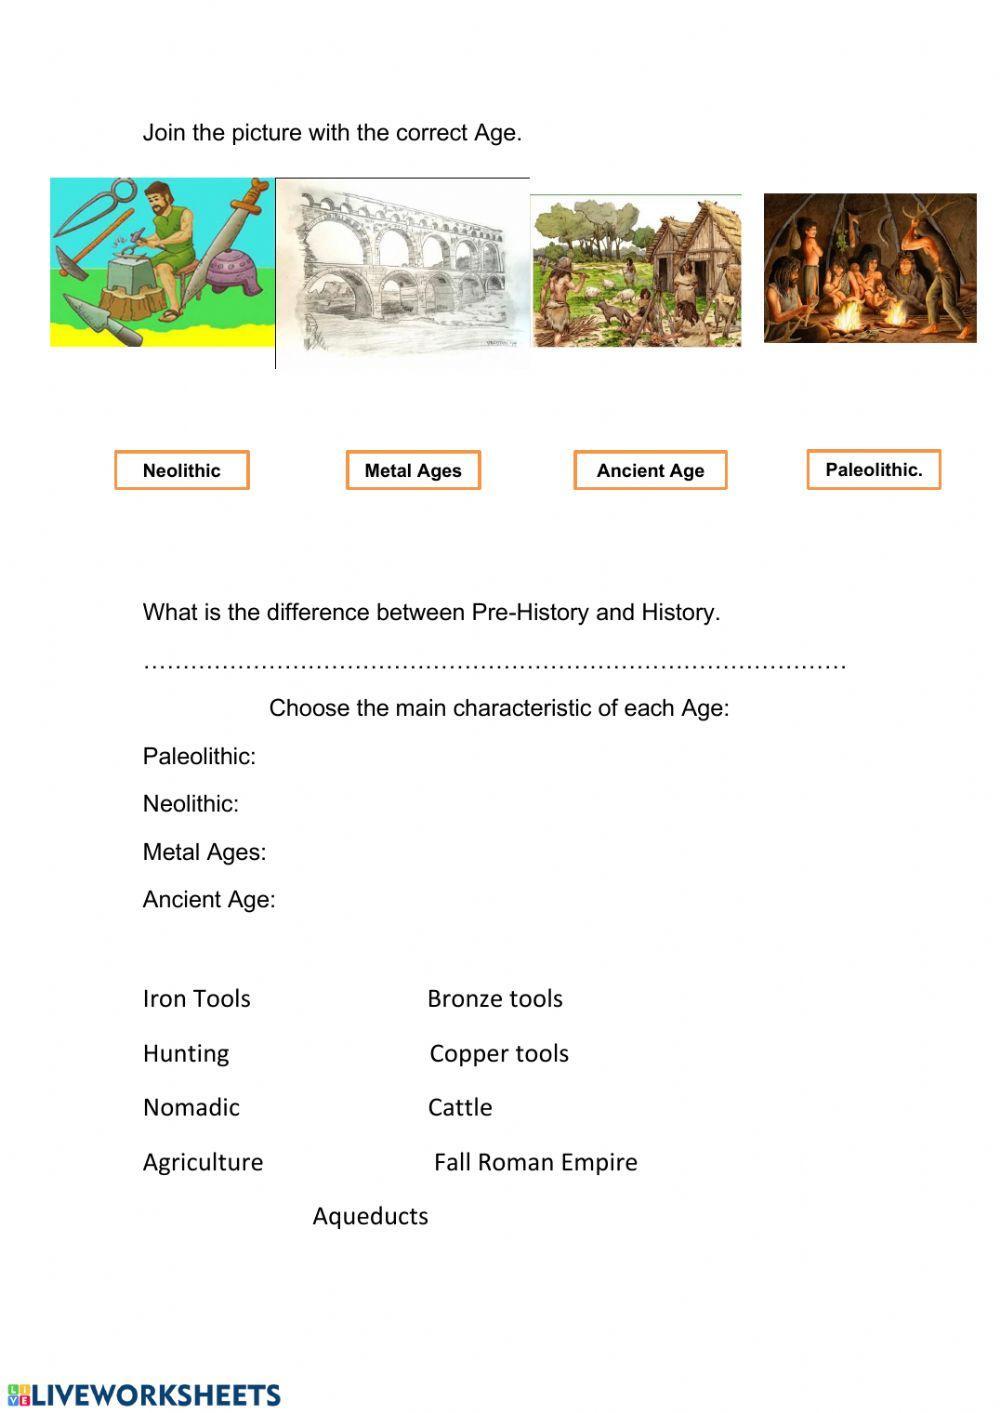 Prehistory and history time line